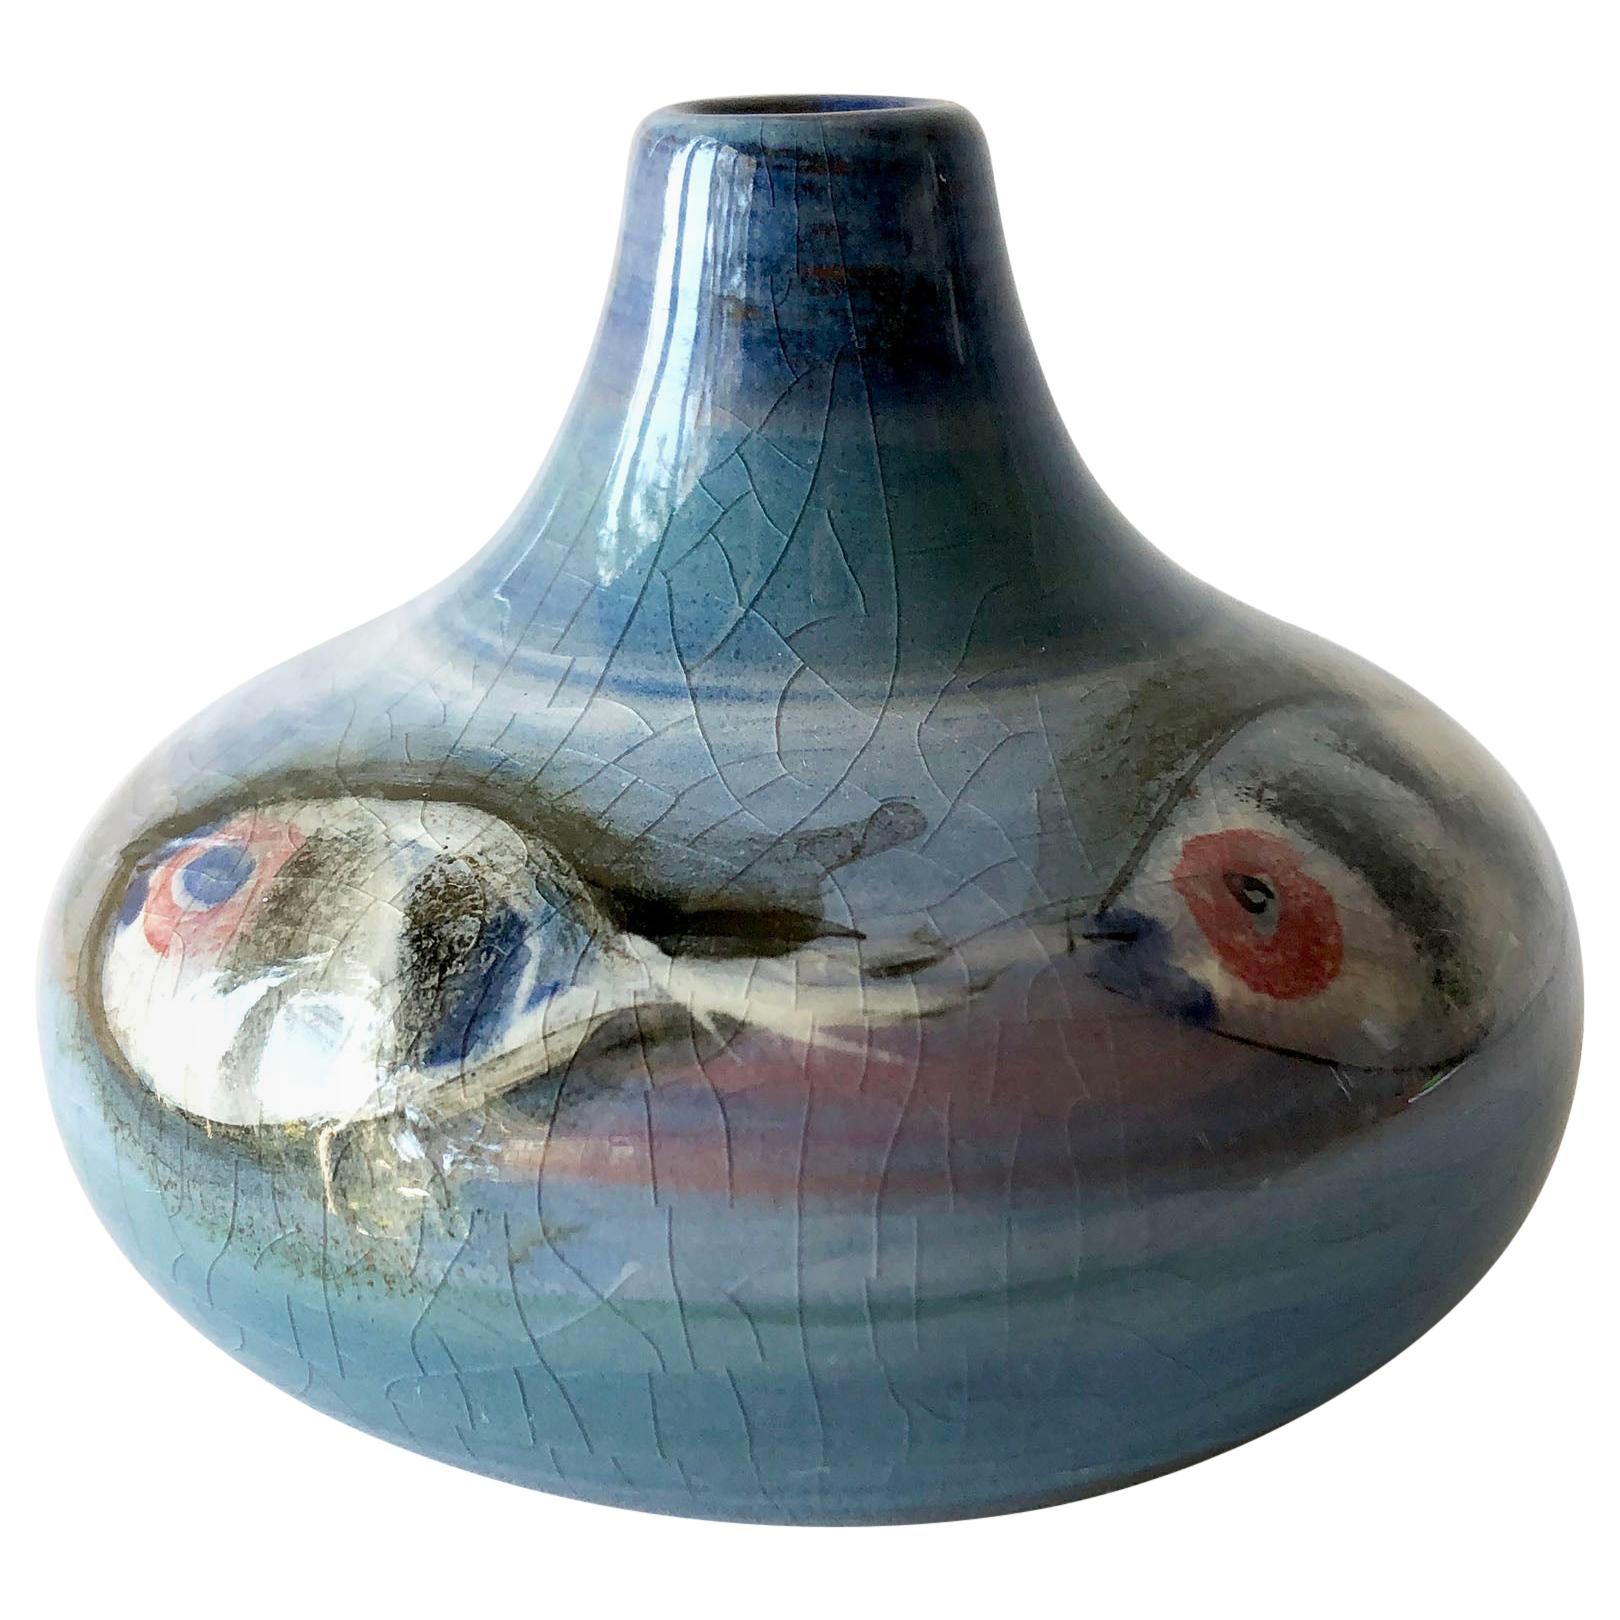 Polia Pillin California Studio Pottery Weed Bud Vase